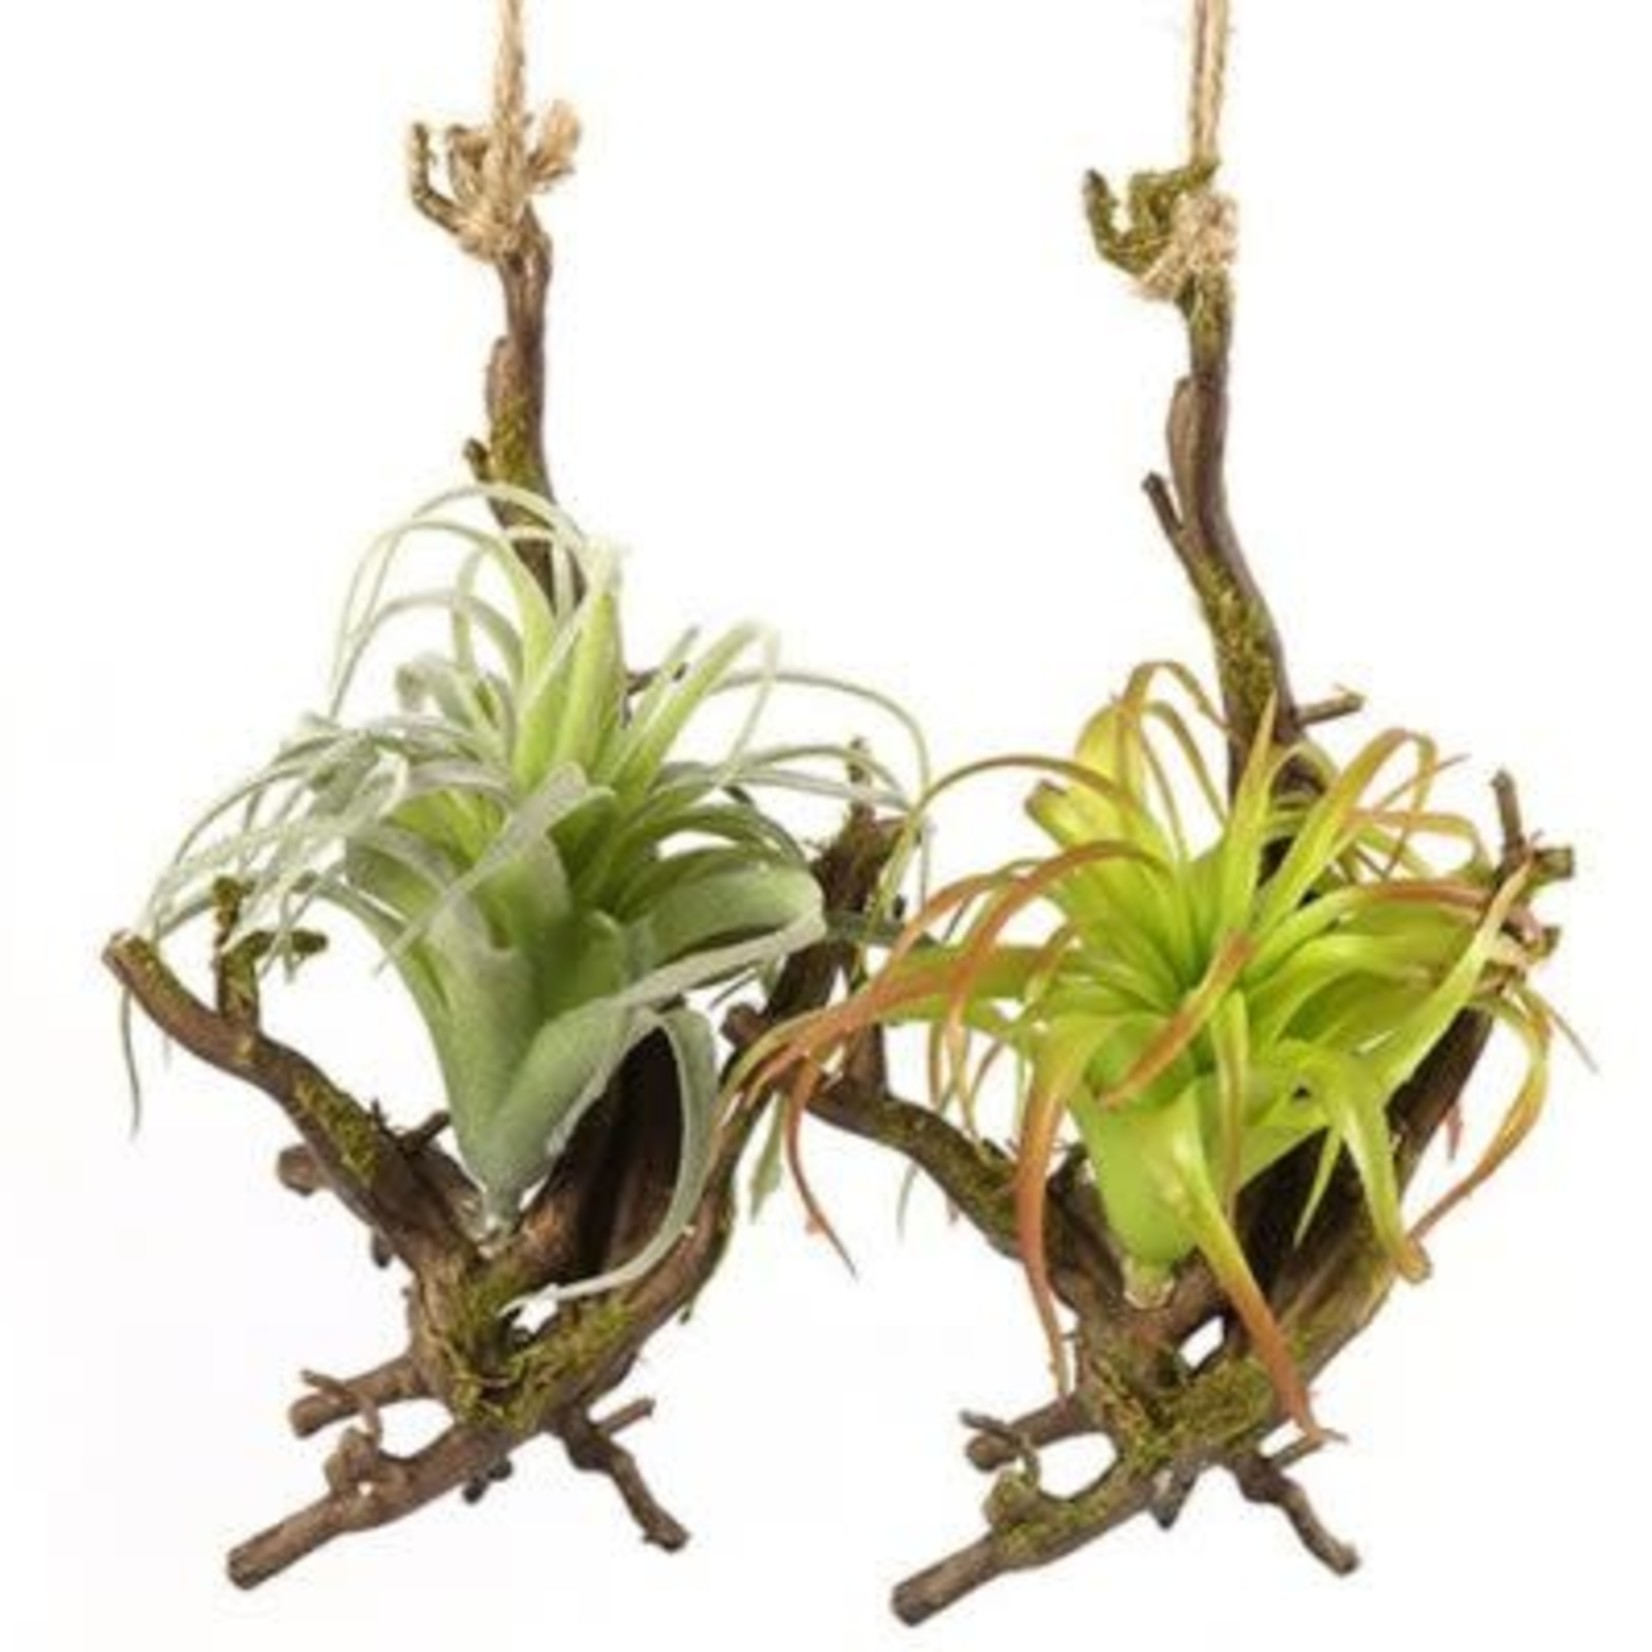 Plante artificielle Tillandsia vert - Urban-styl.be